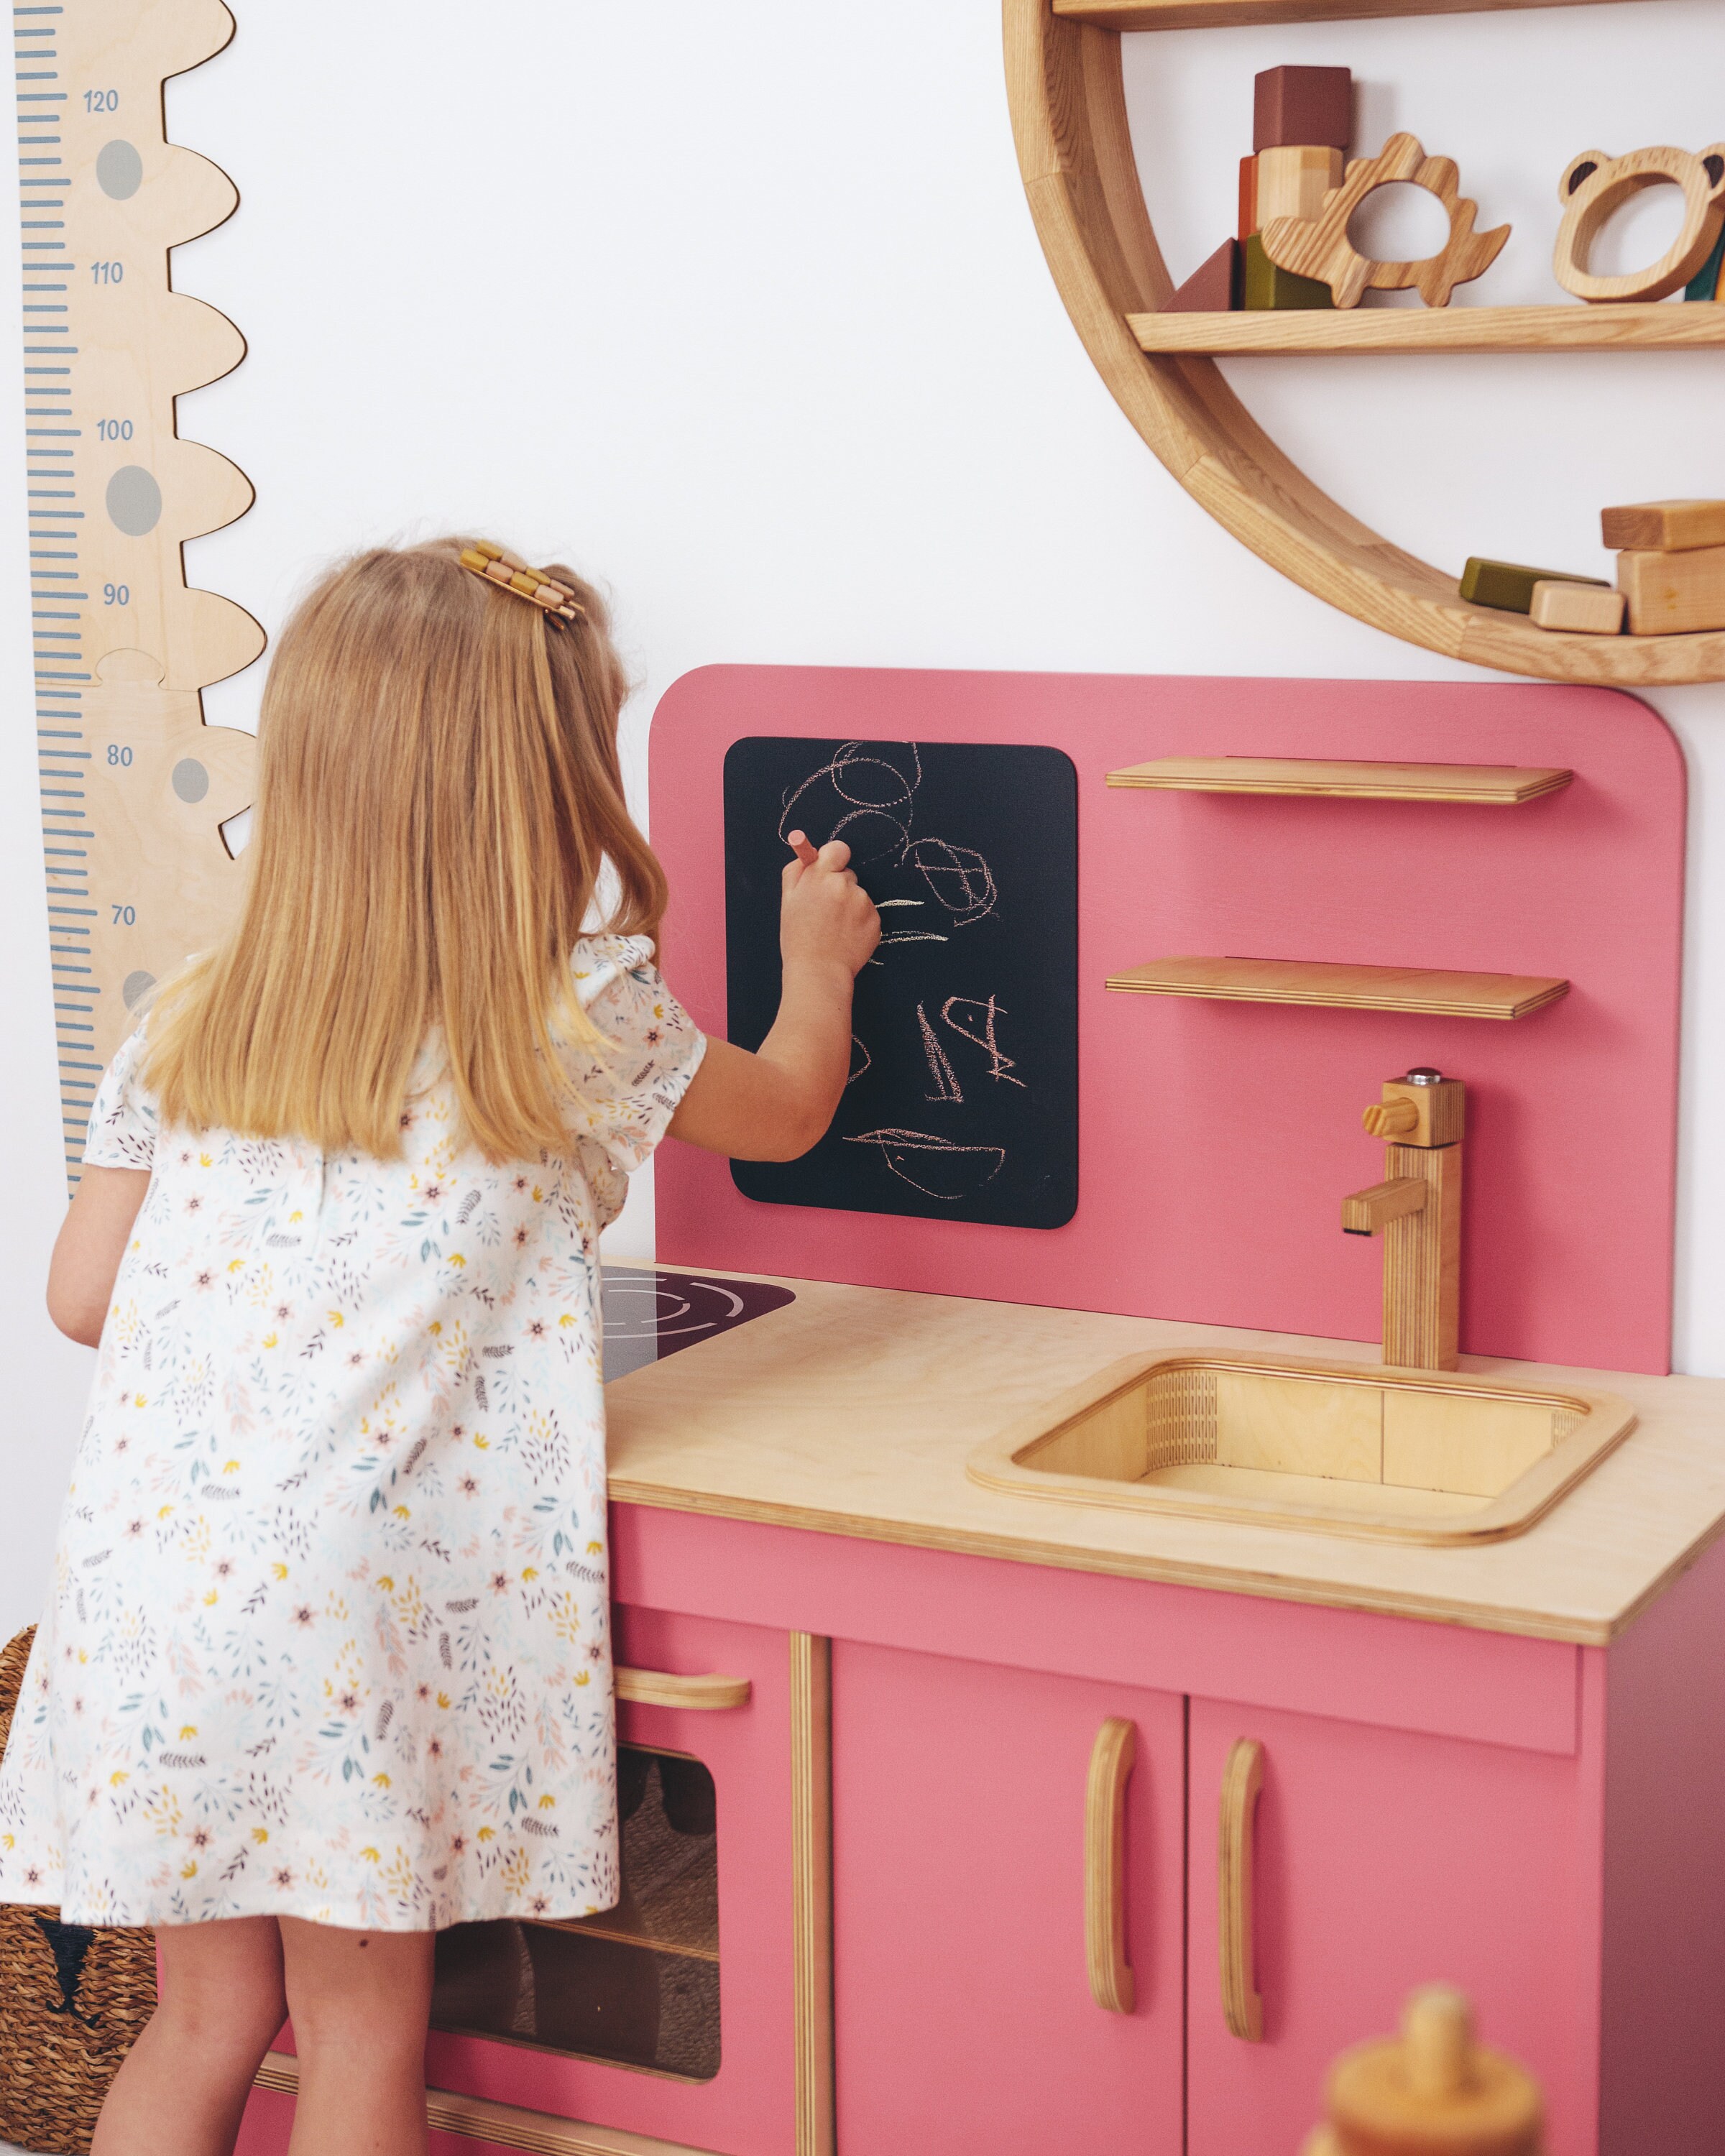 Personalised Childs Play Kitchen Sign Kids Kitchen Cafe Menu Wooden Kitchen  Mud Kitchen Accessories Playroom Decor Sign Play Menu 